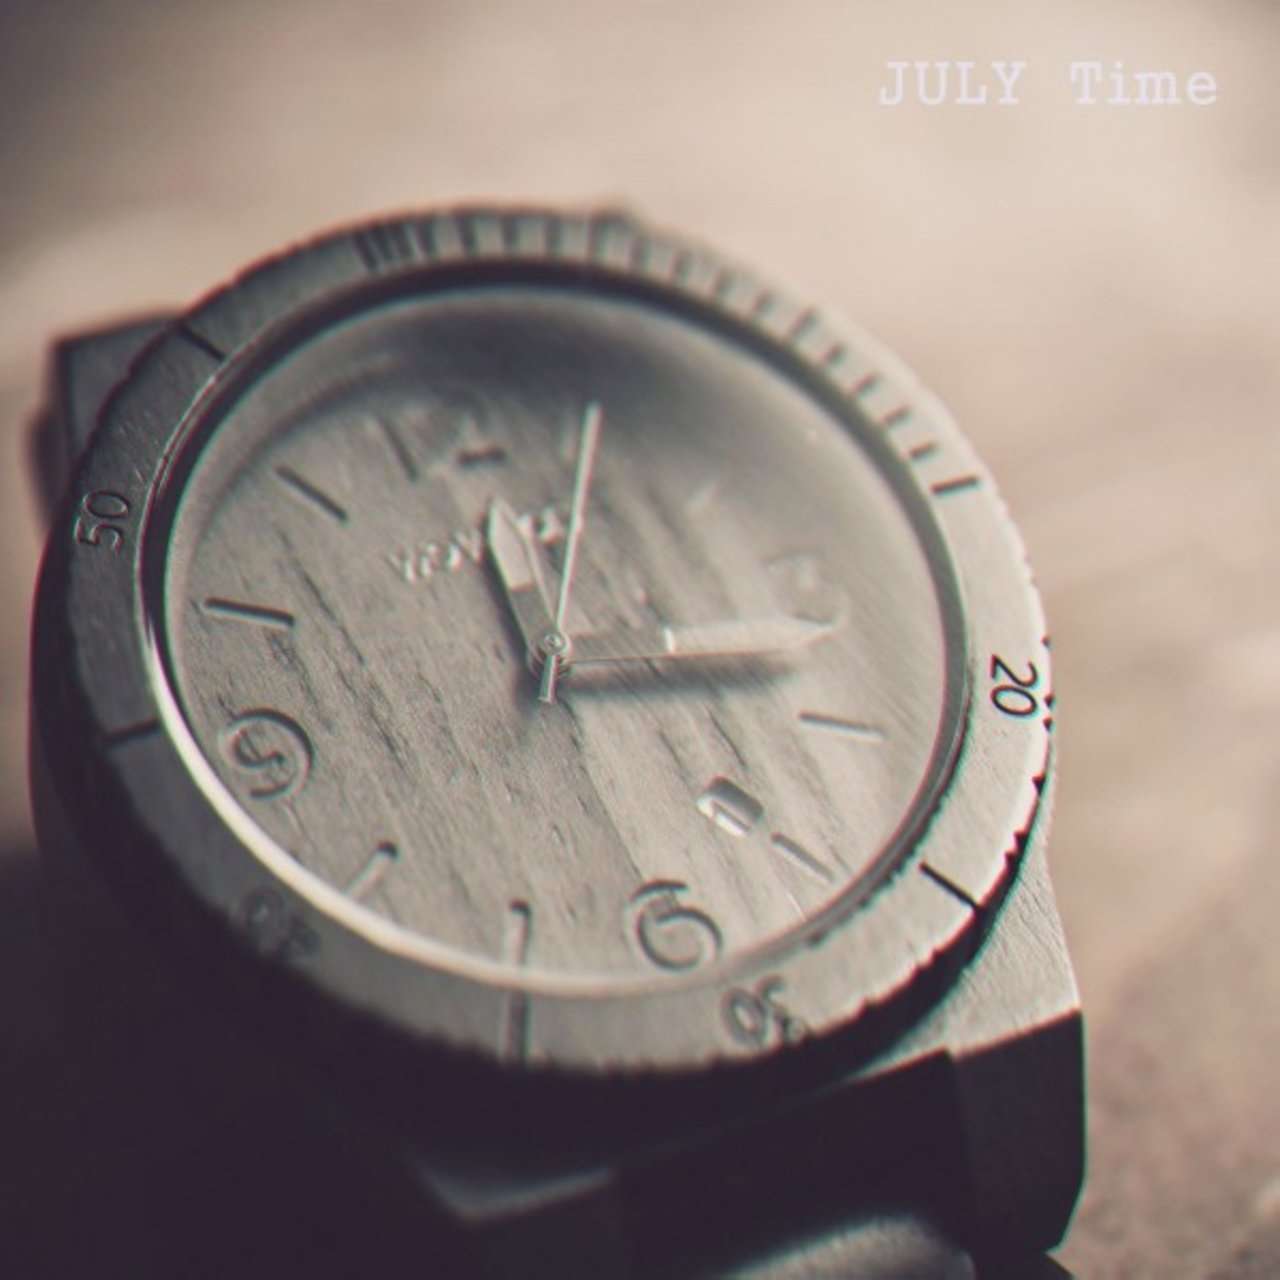 July《Time》[CD级无损/44.1kHz/16bit]